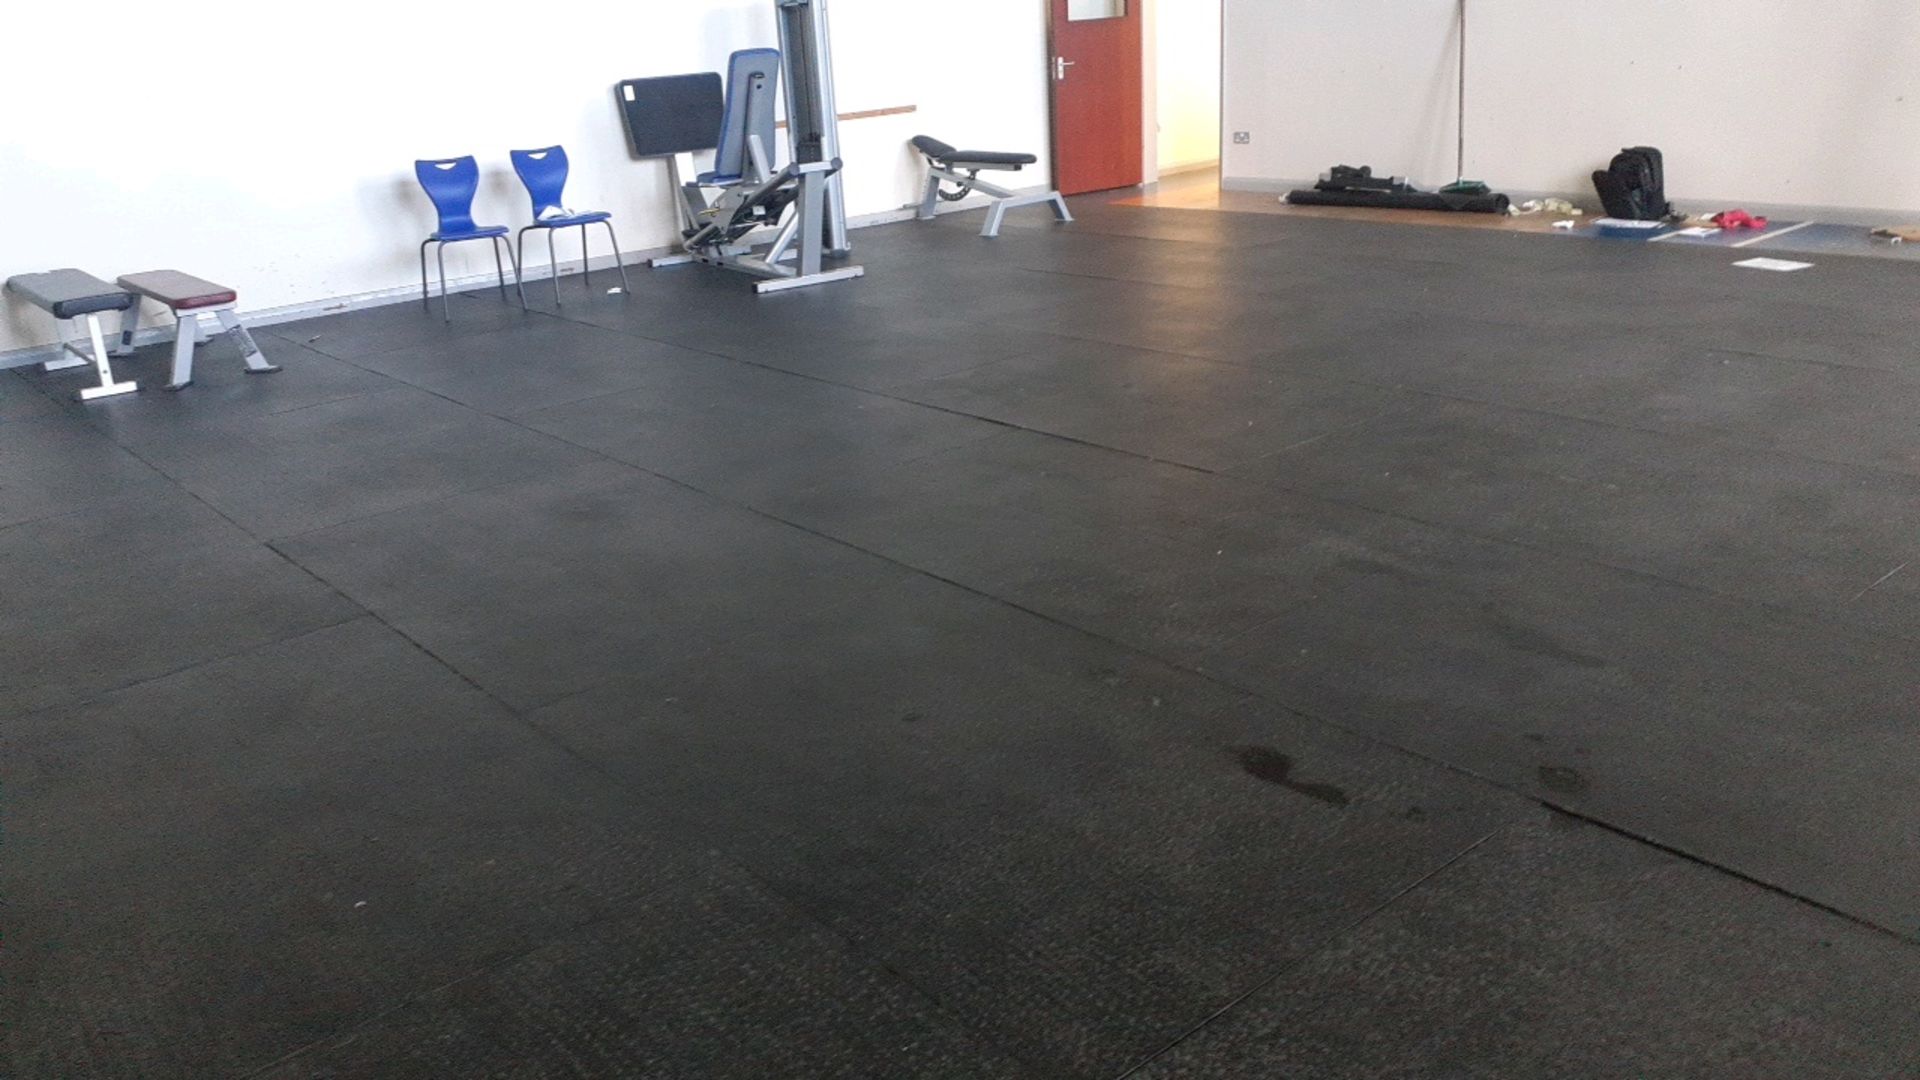 Gym floor - Image 2 of 3